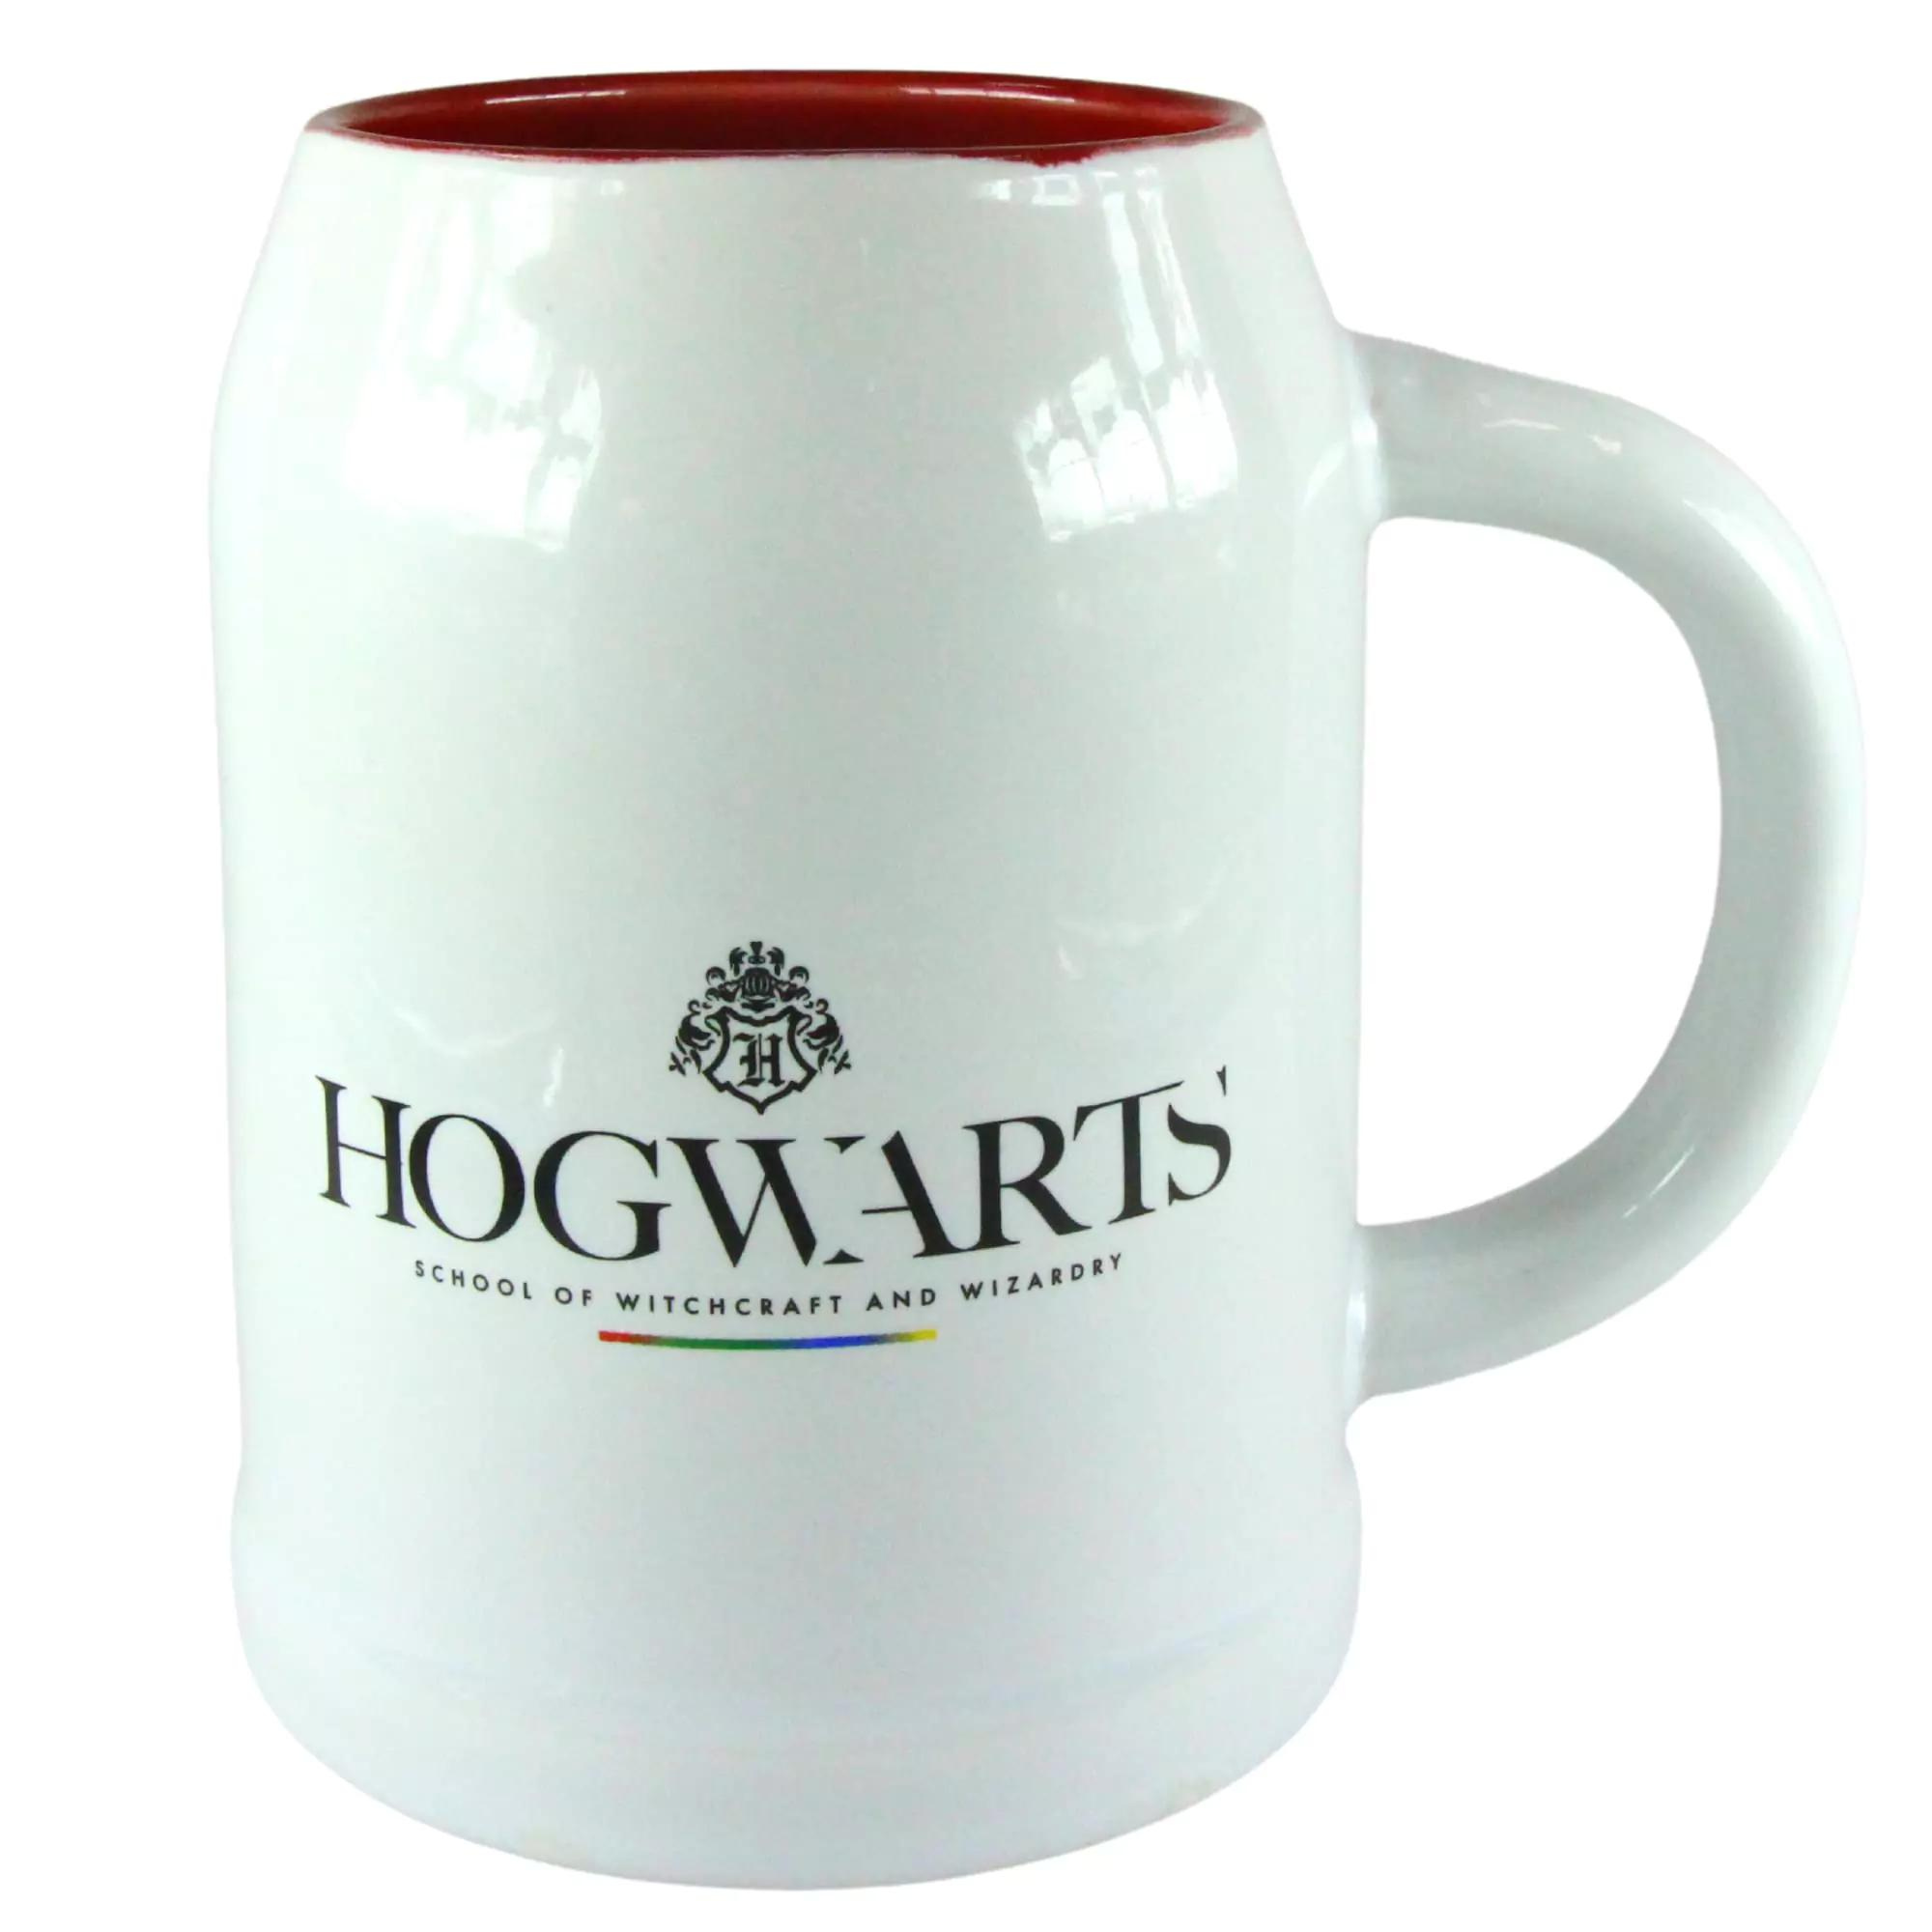 Harry Potter Hogwarts Gryffindor - Large 600ml Mug Ceramic Stein - Coffee/Tea Mug Twin Pack Gift Boxed - Toptoys2u